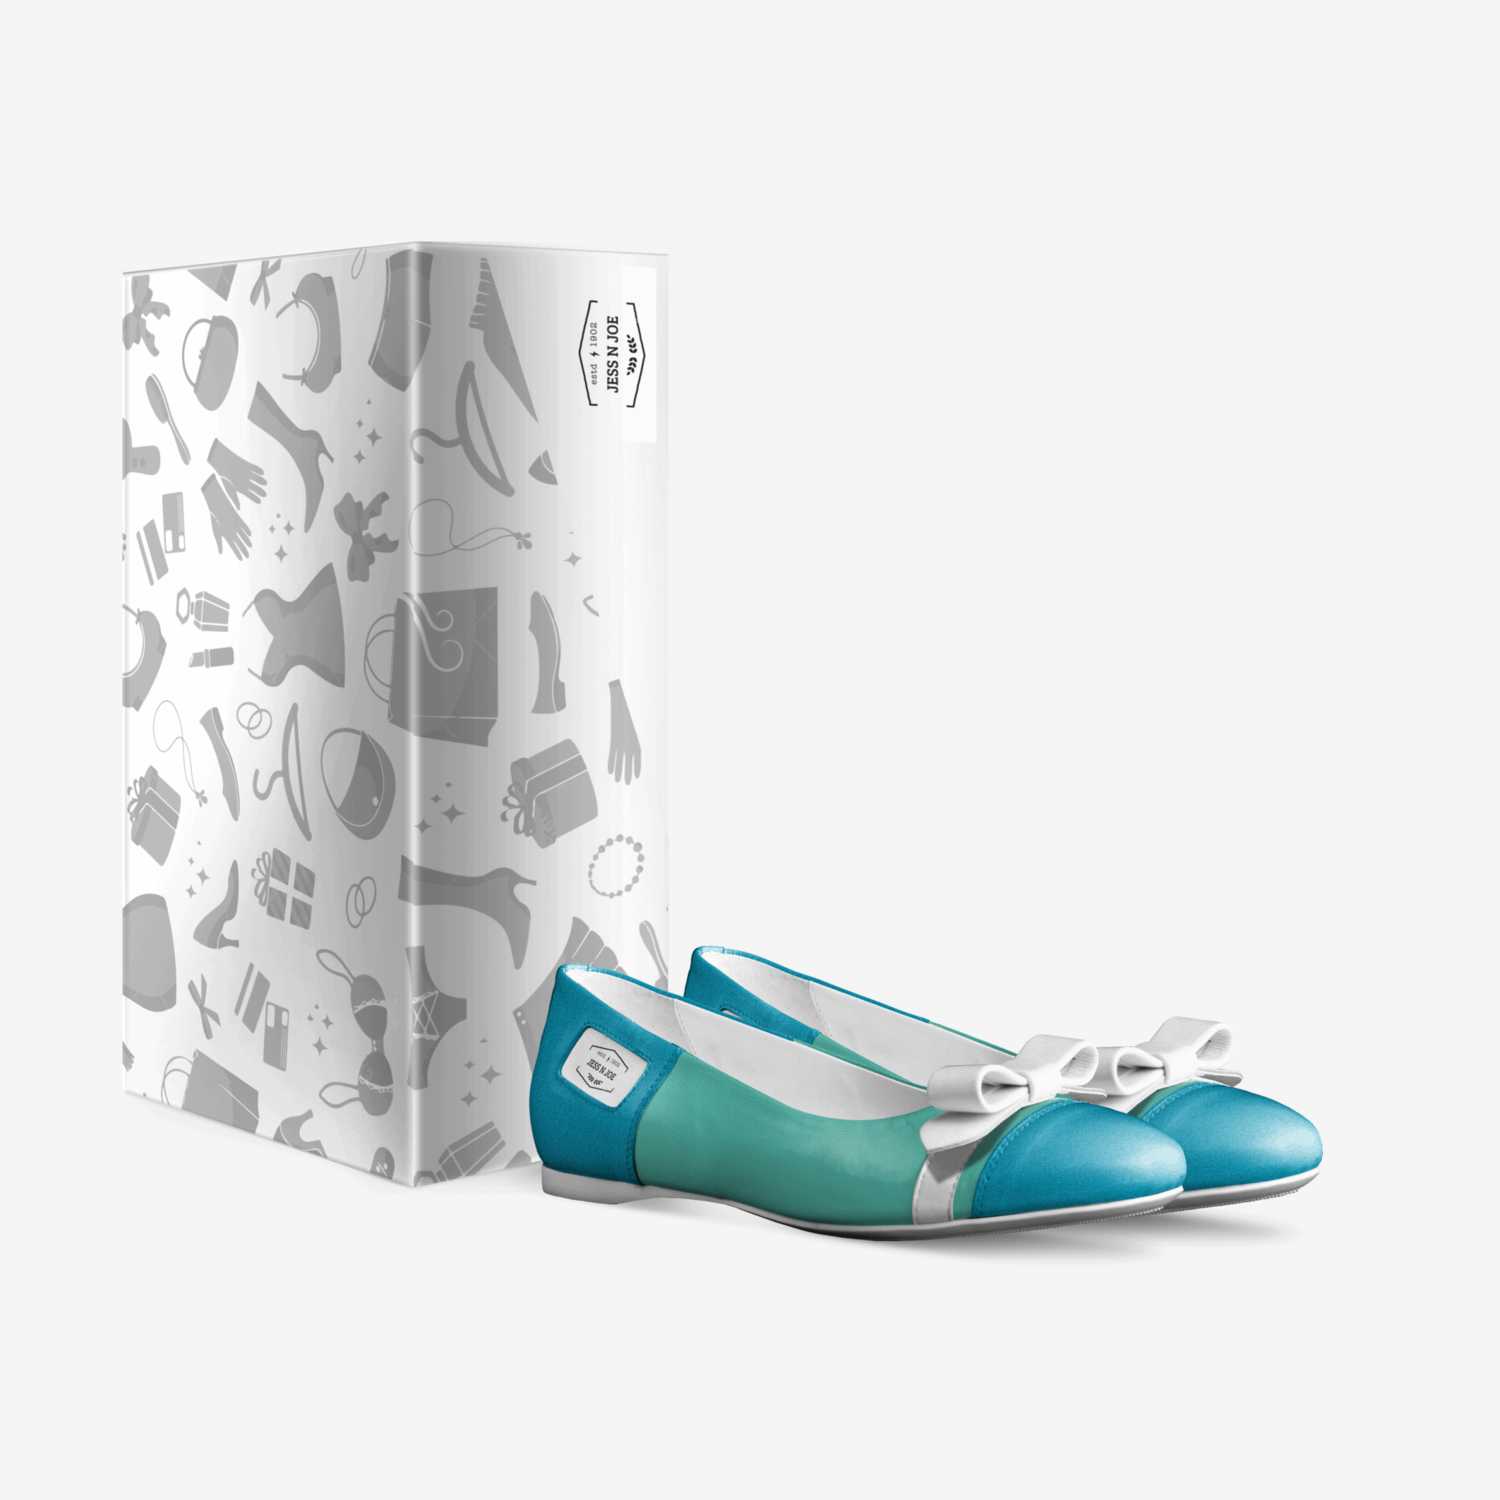 jess n joe custom made in Italy shoes by Johannes Adriel | Box view